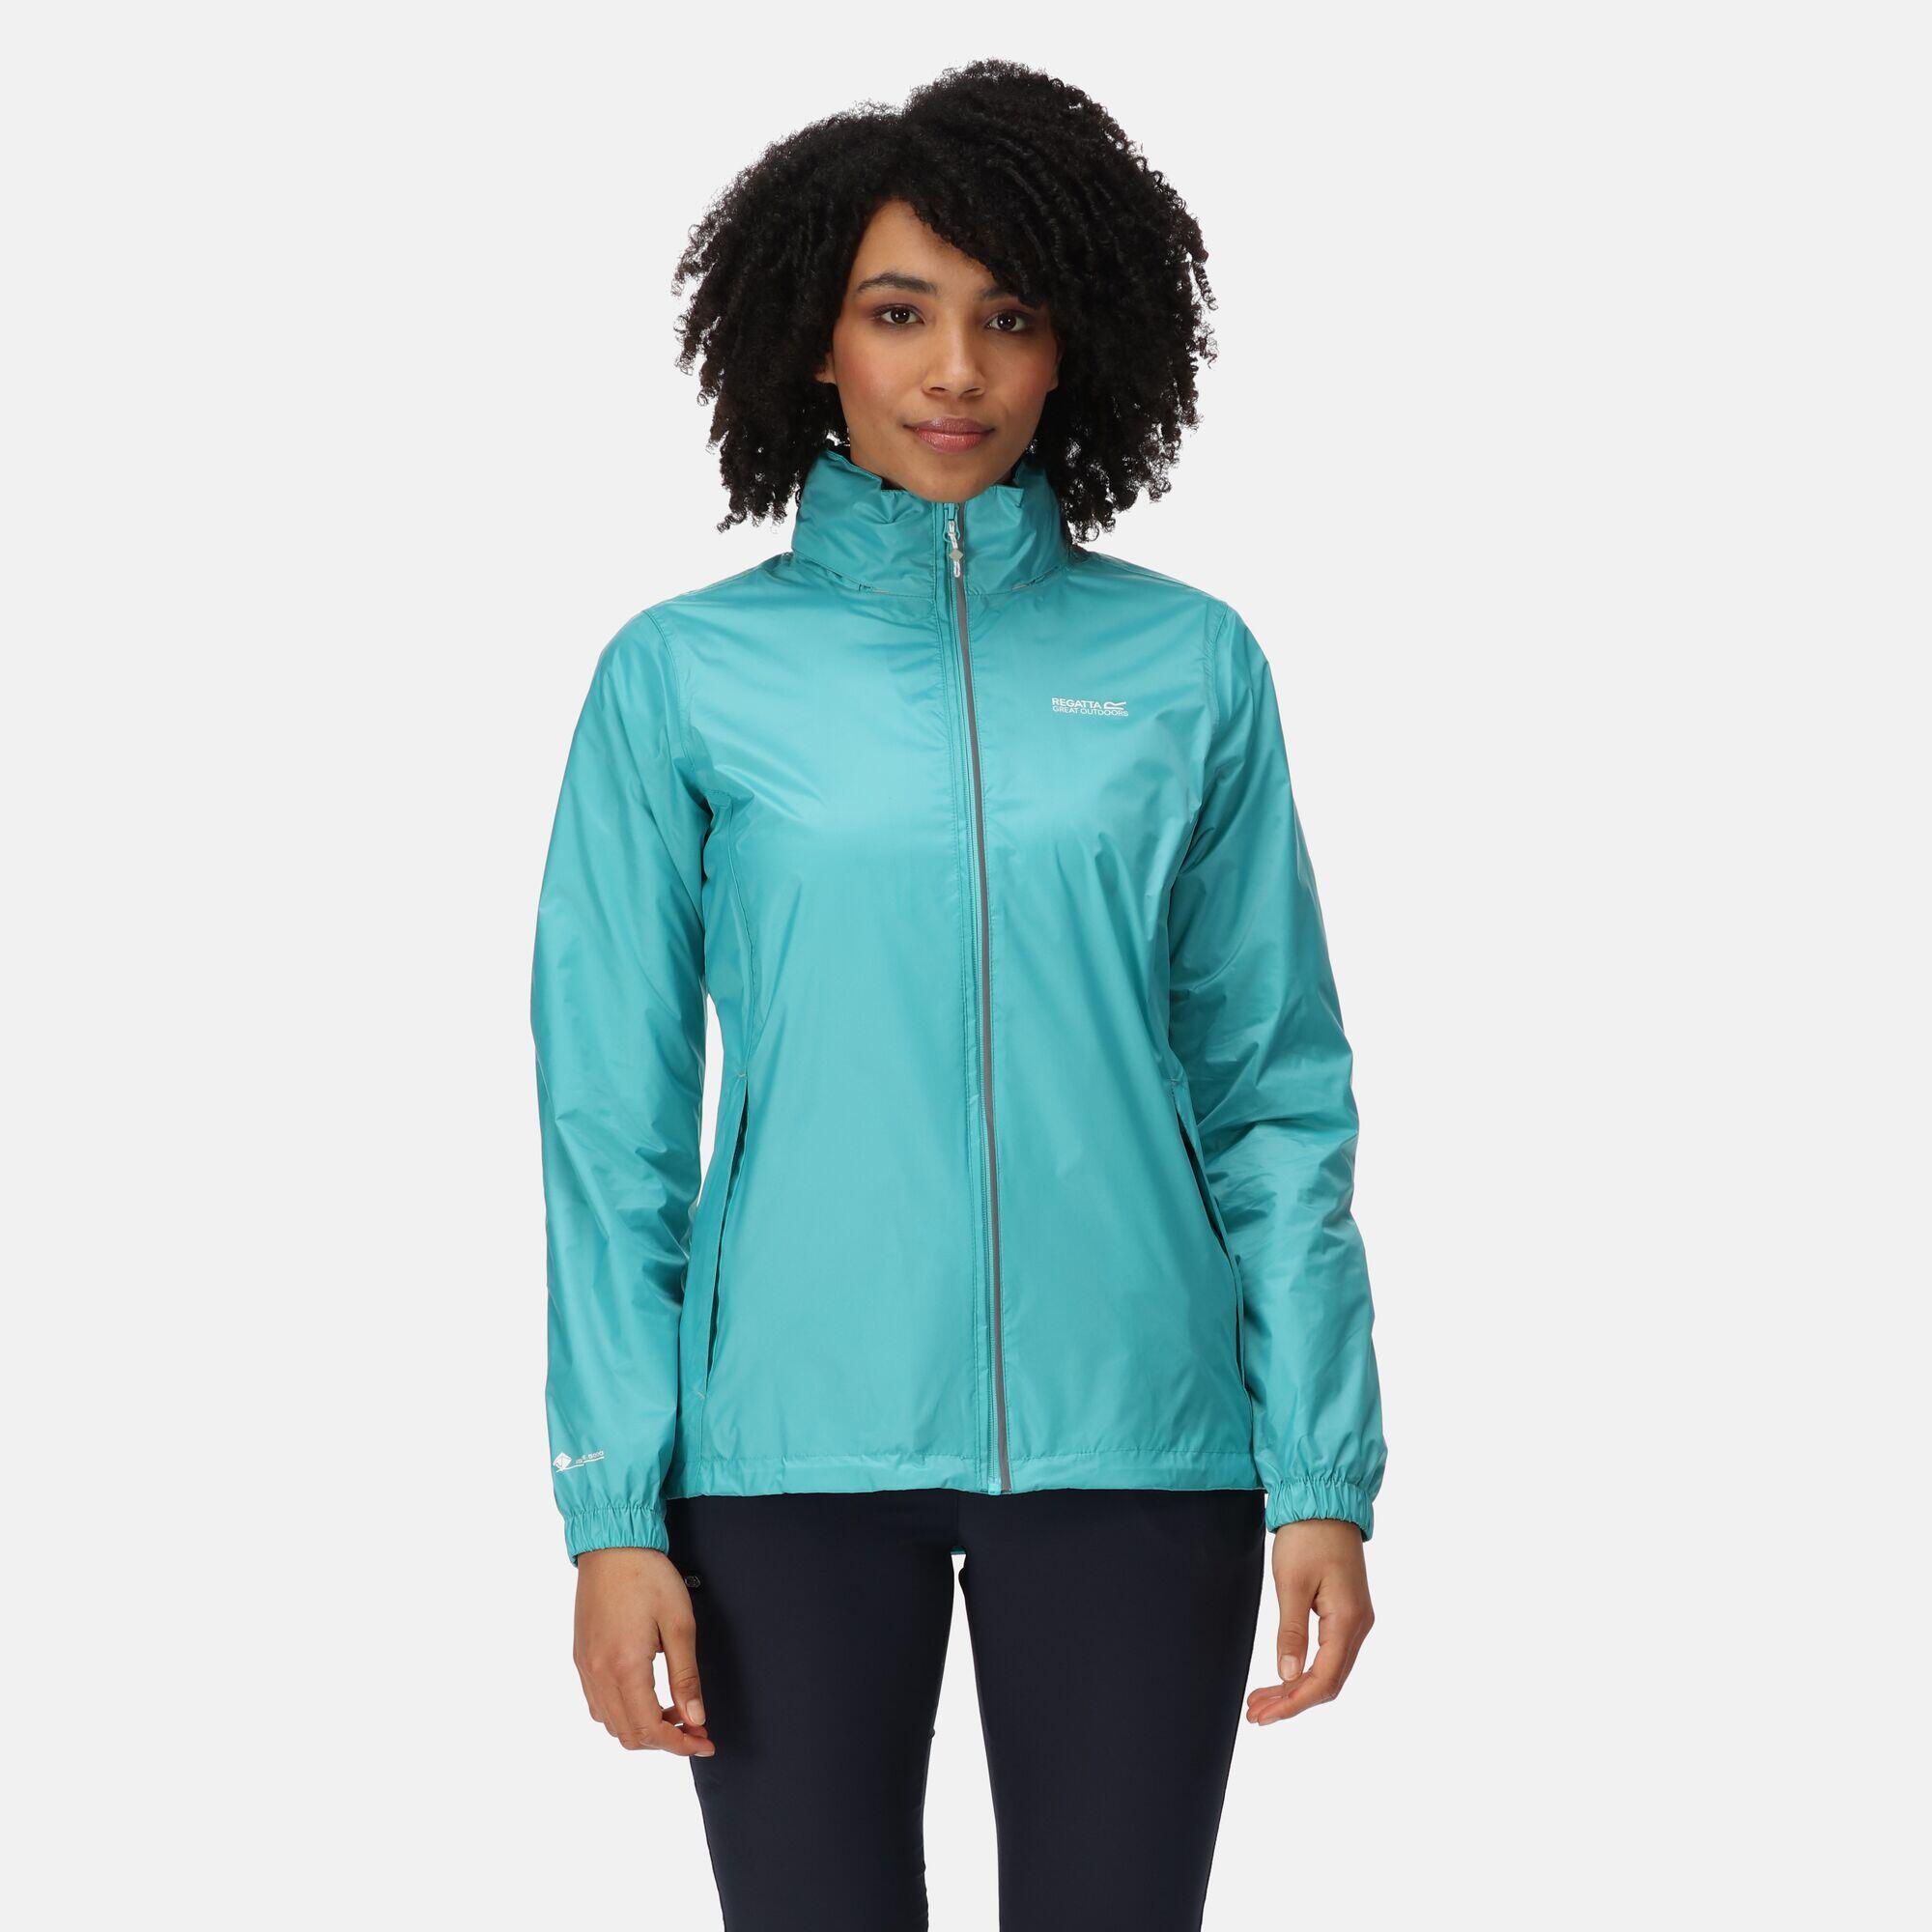 Corinne IV Women's Fitness Waterproof Rain Jacket - Turquoise 1/6